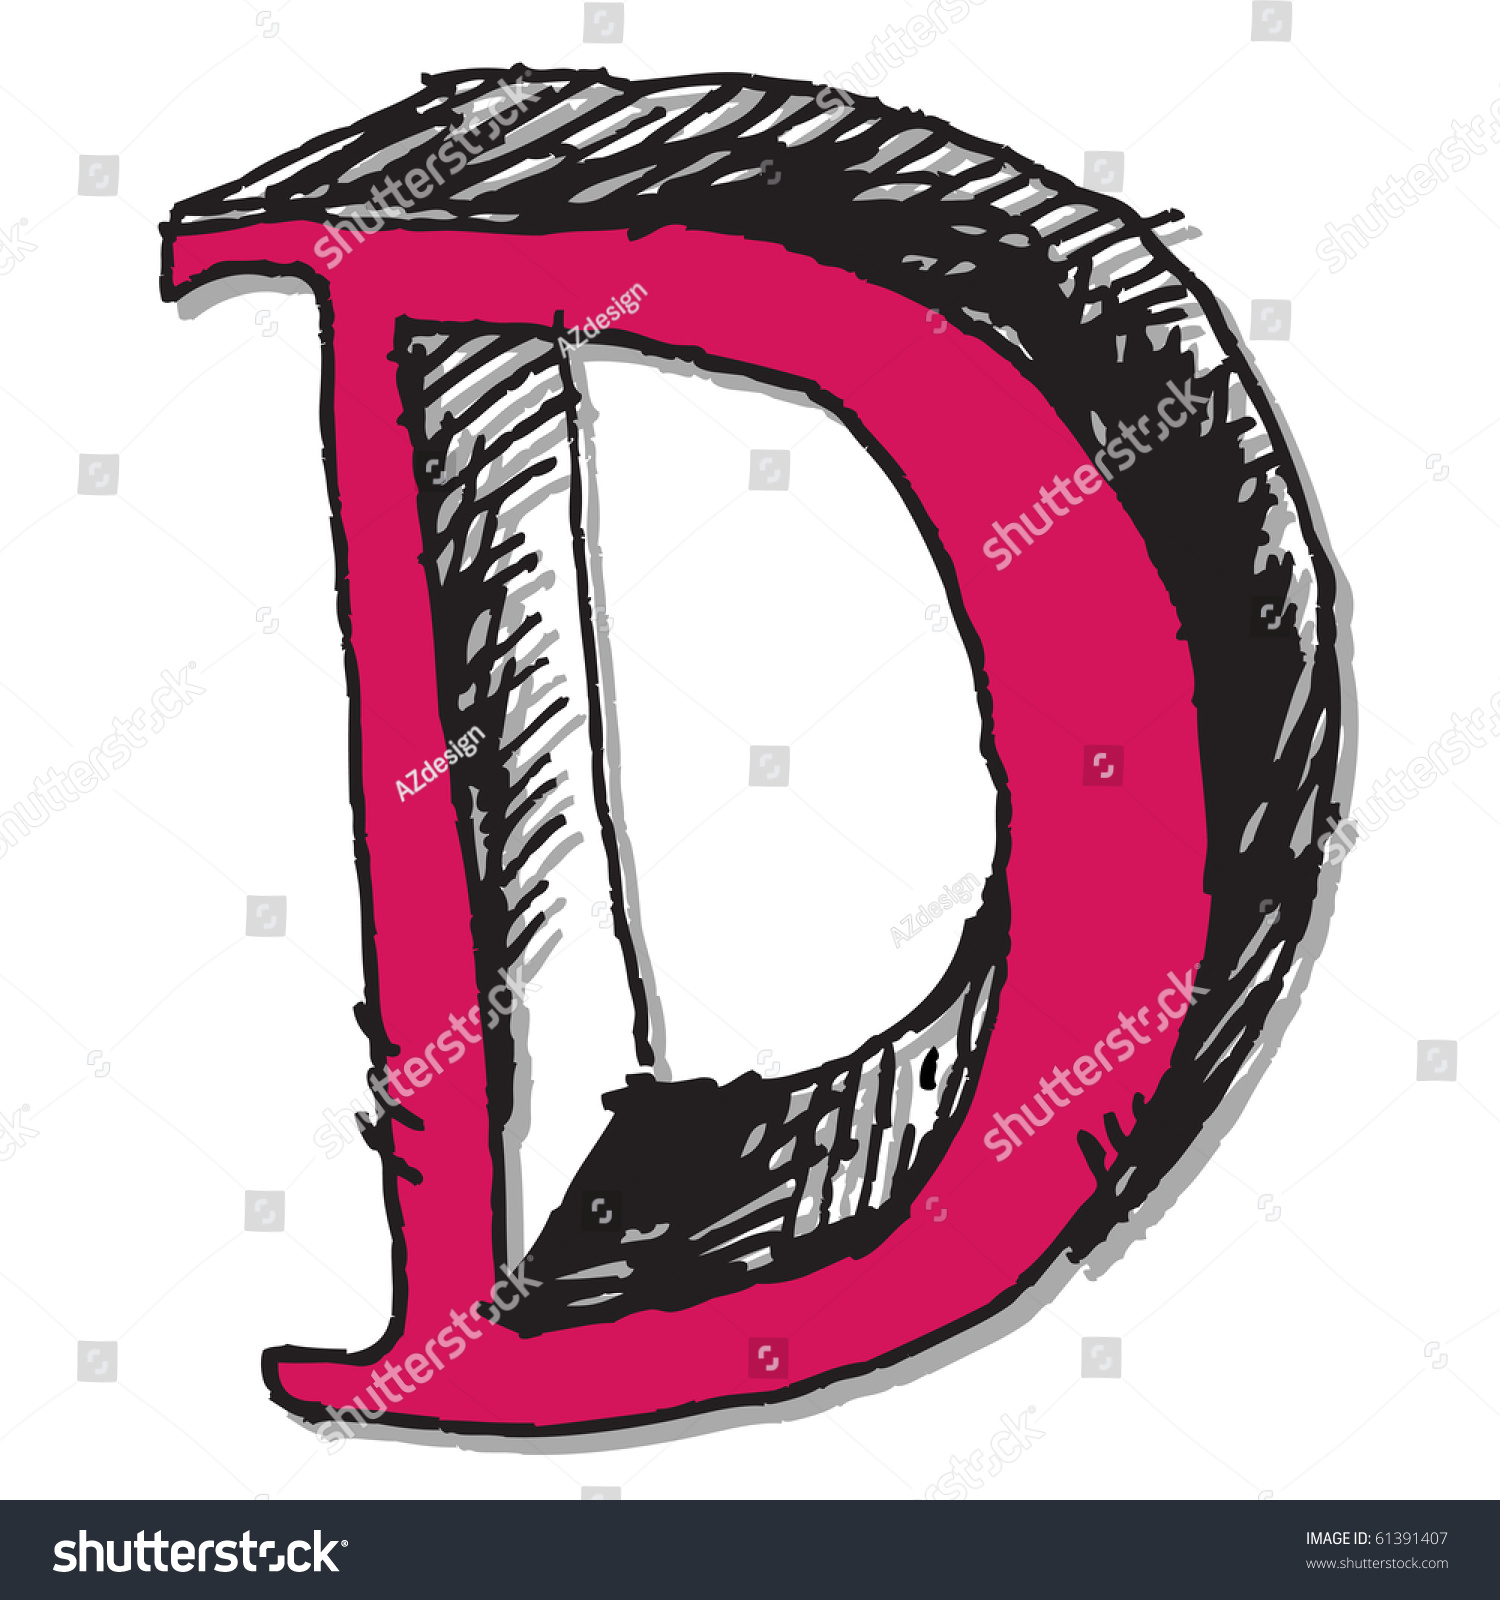 Hand Drawn Letter D Isolated On Stock Illustration 61391407 - Shutterstock